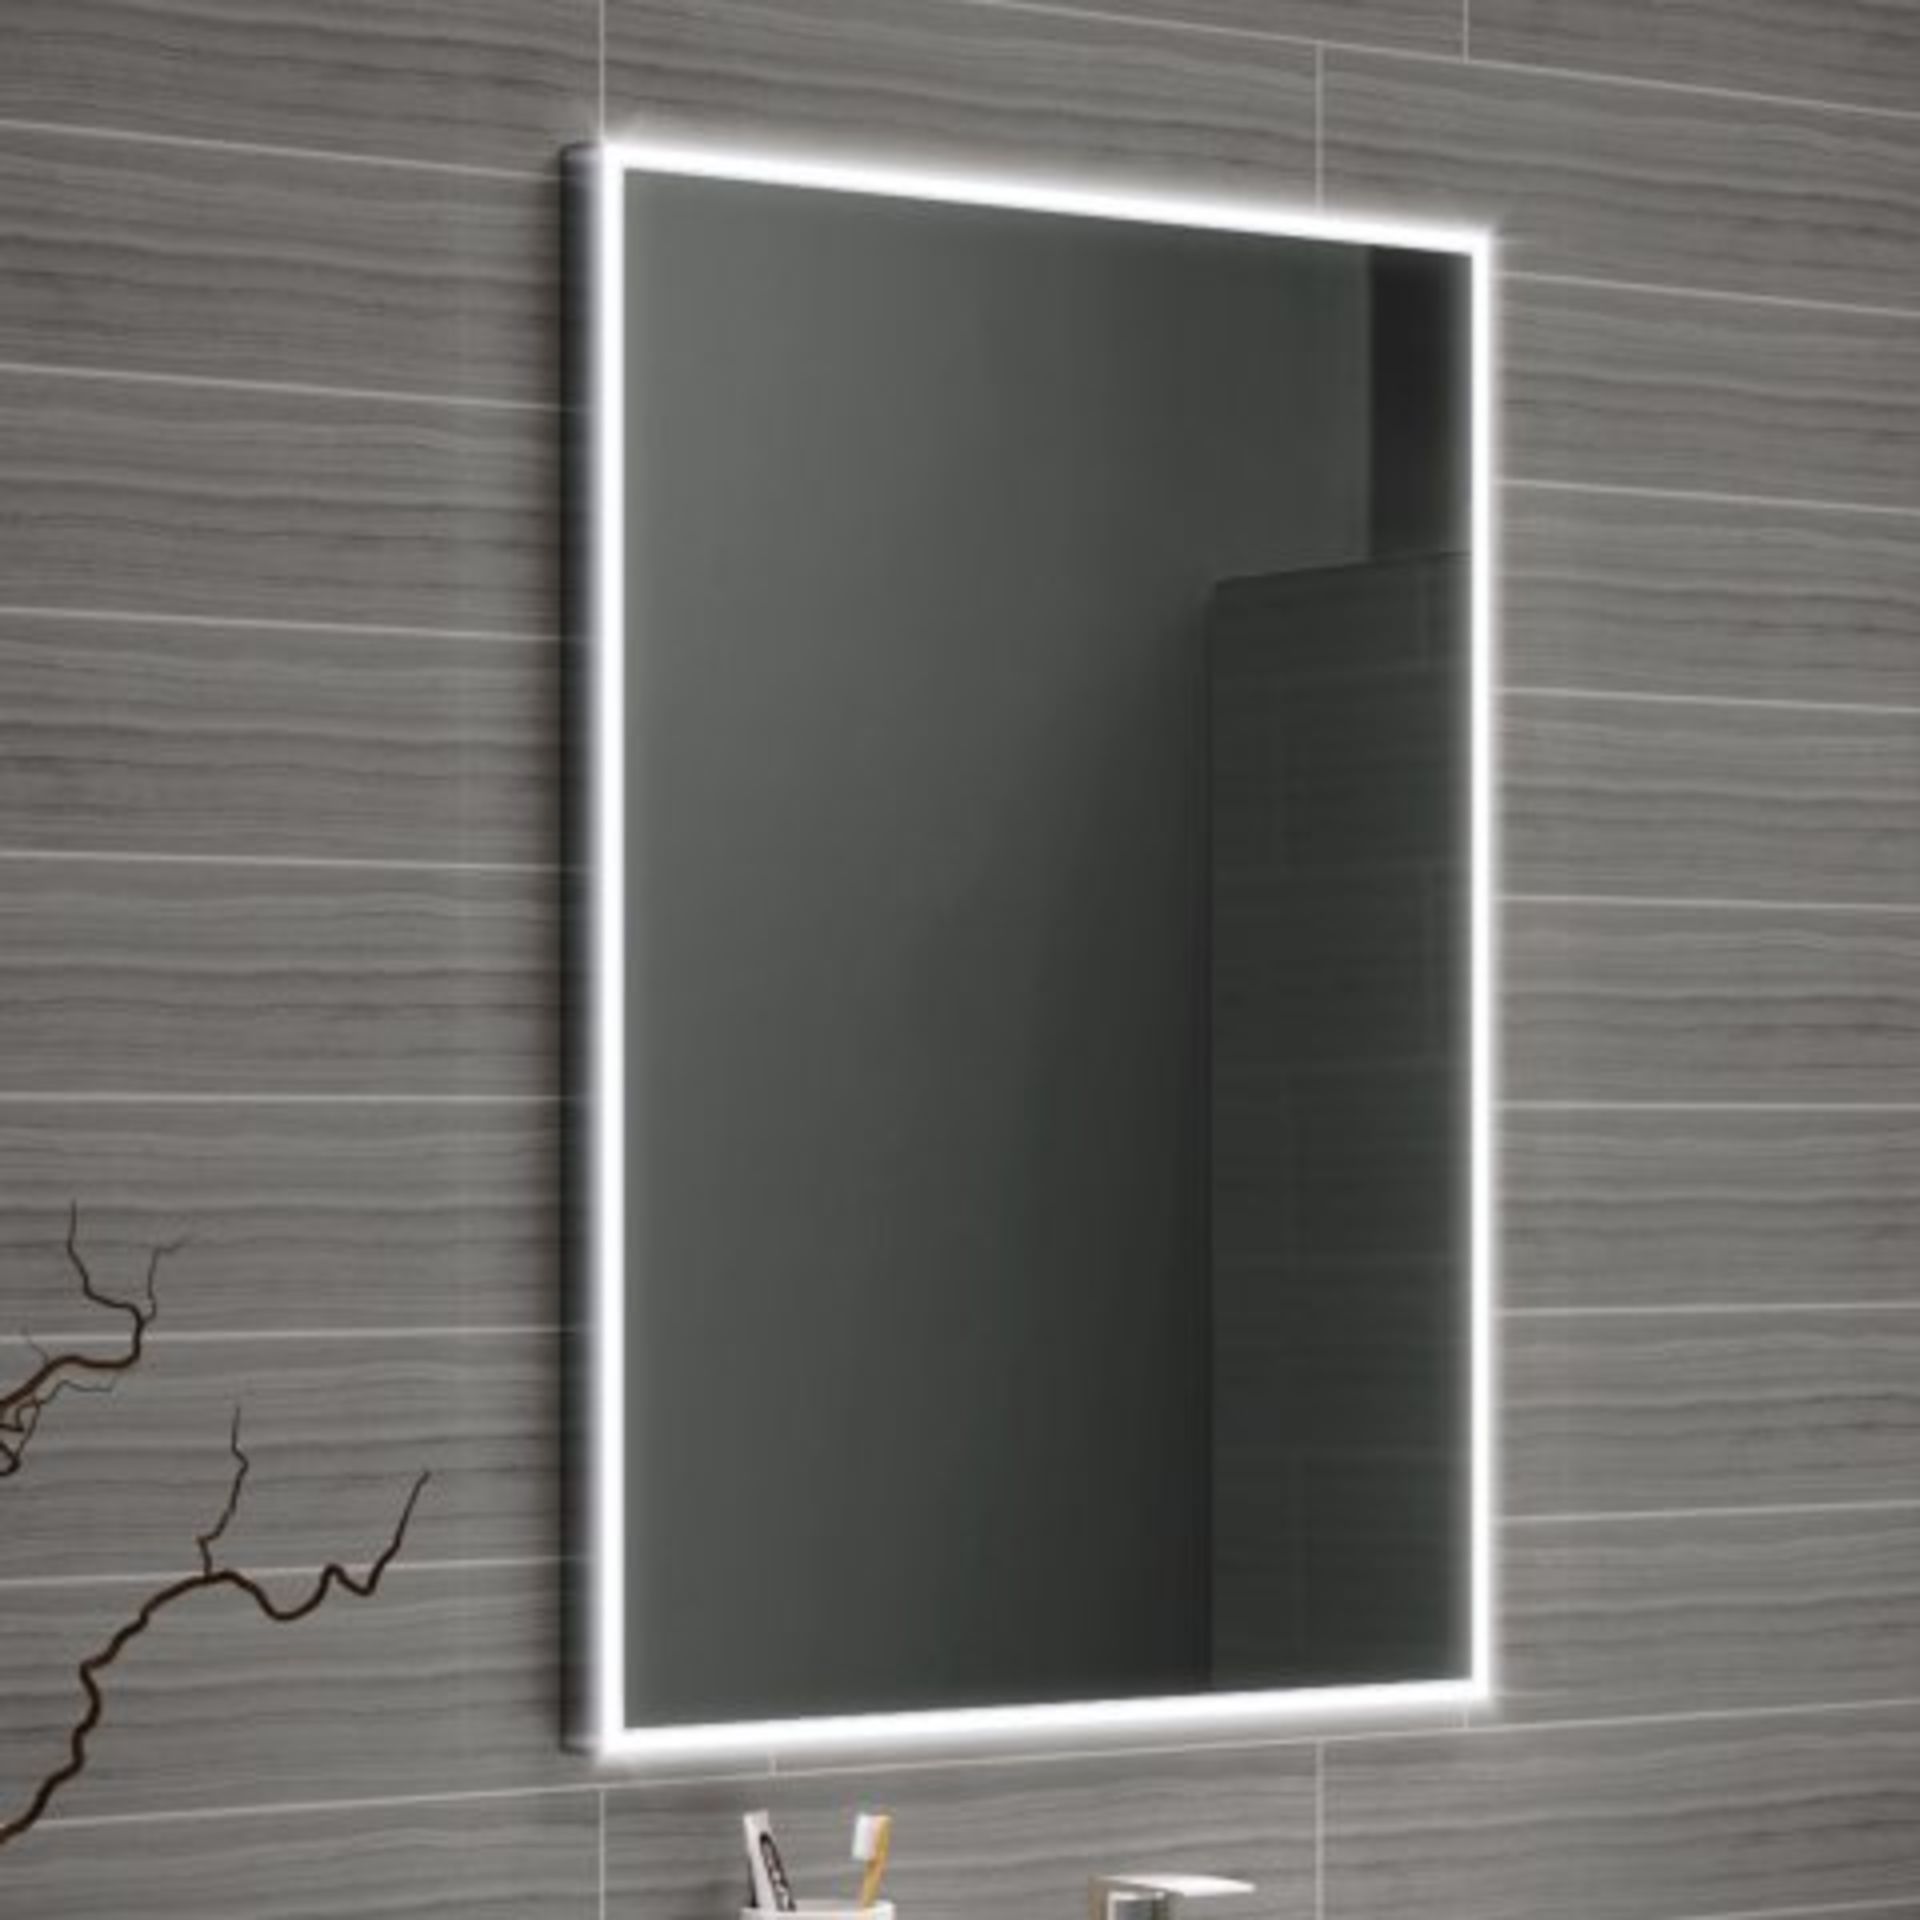 (I150) 700x500mm Cosmic Illuminated LED Mirror. RRP £349.99. A rectangular mirror with LED